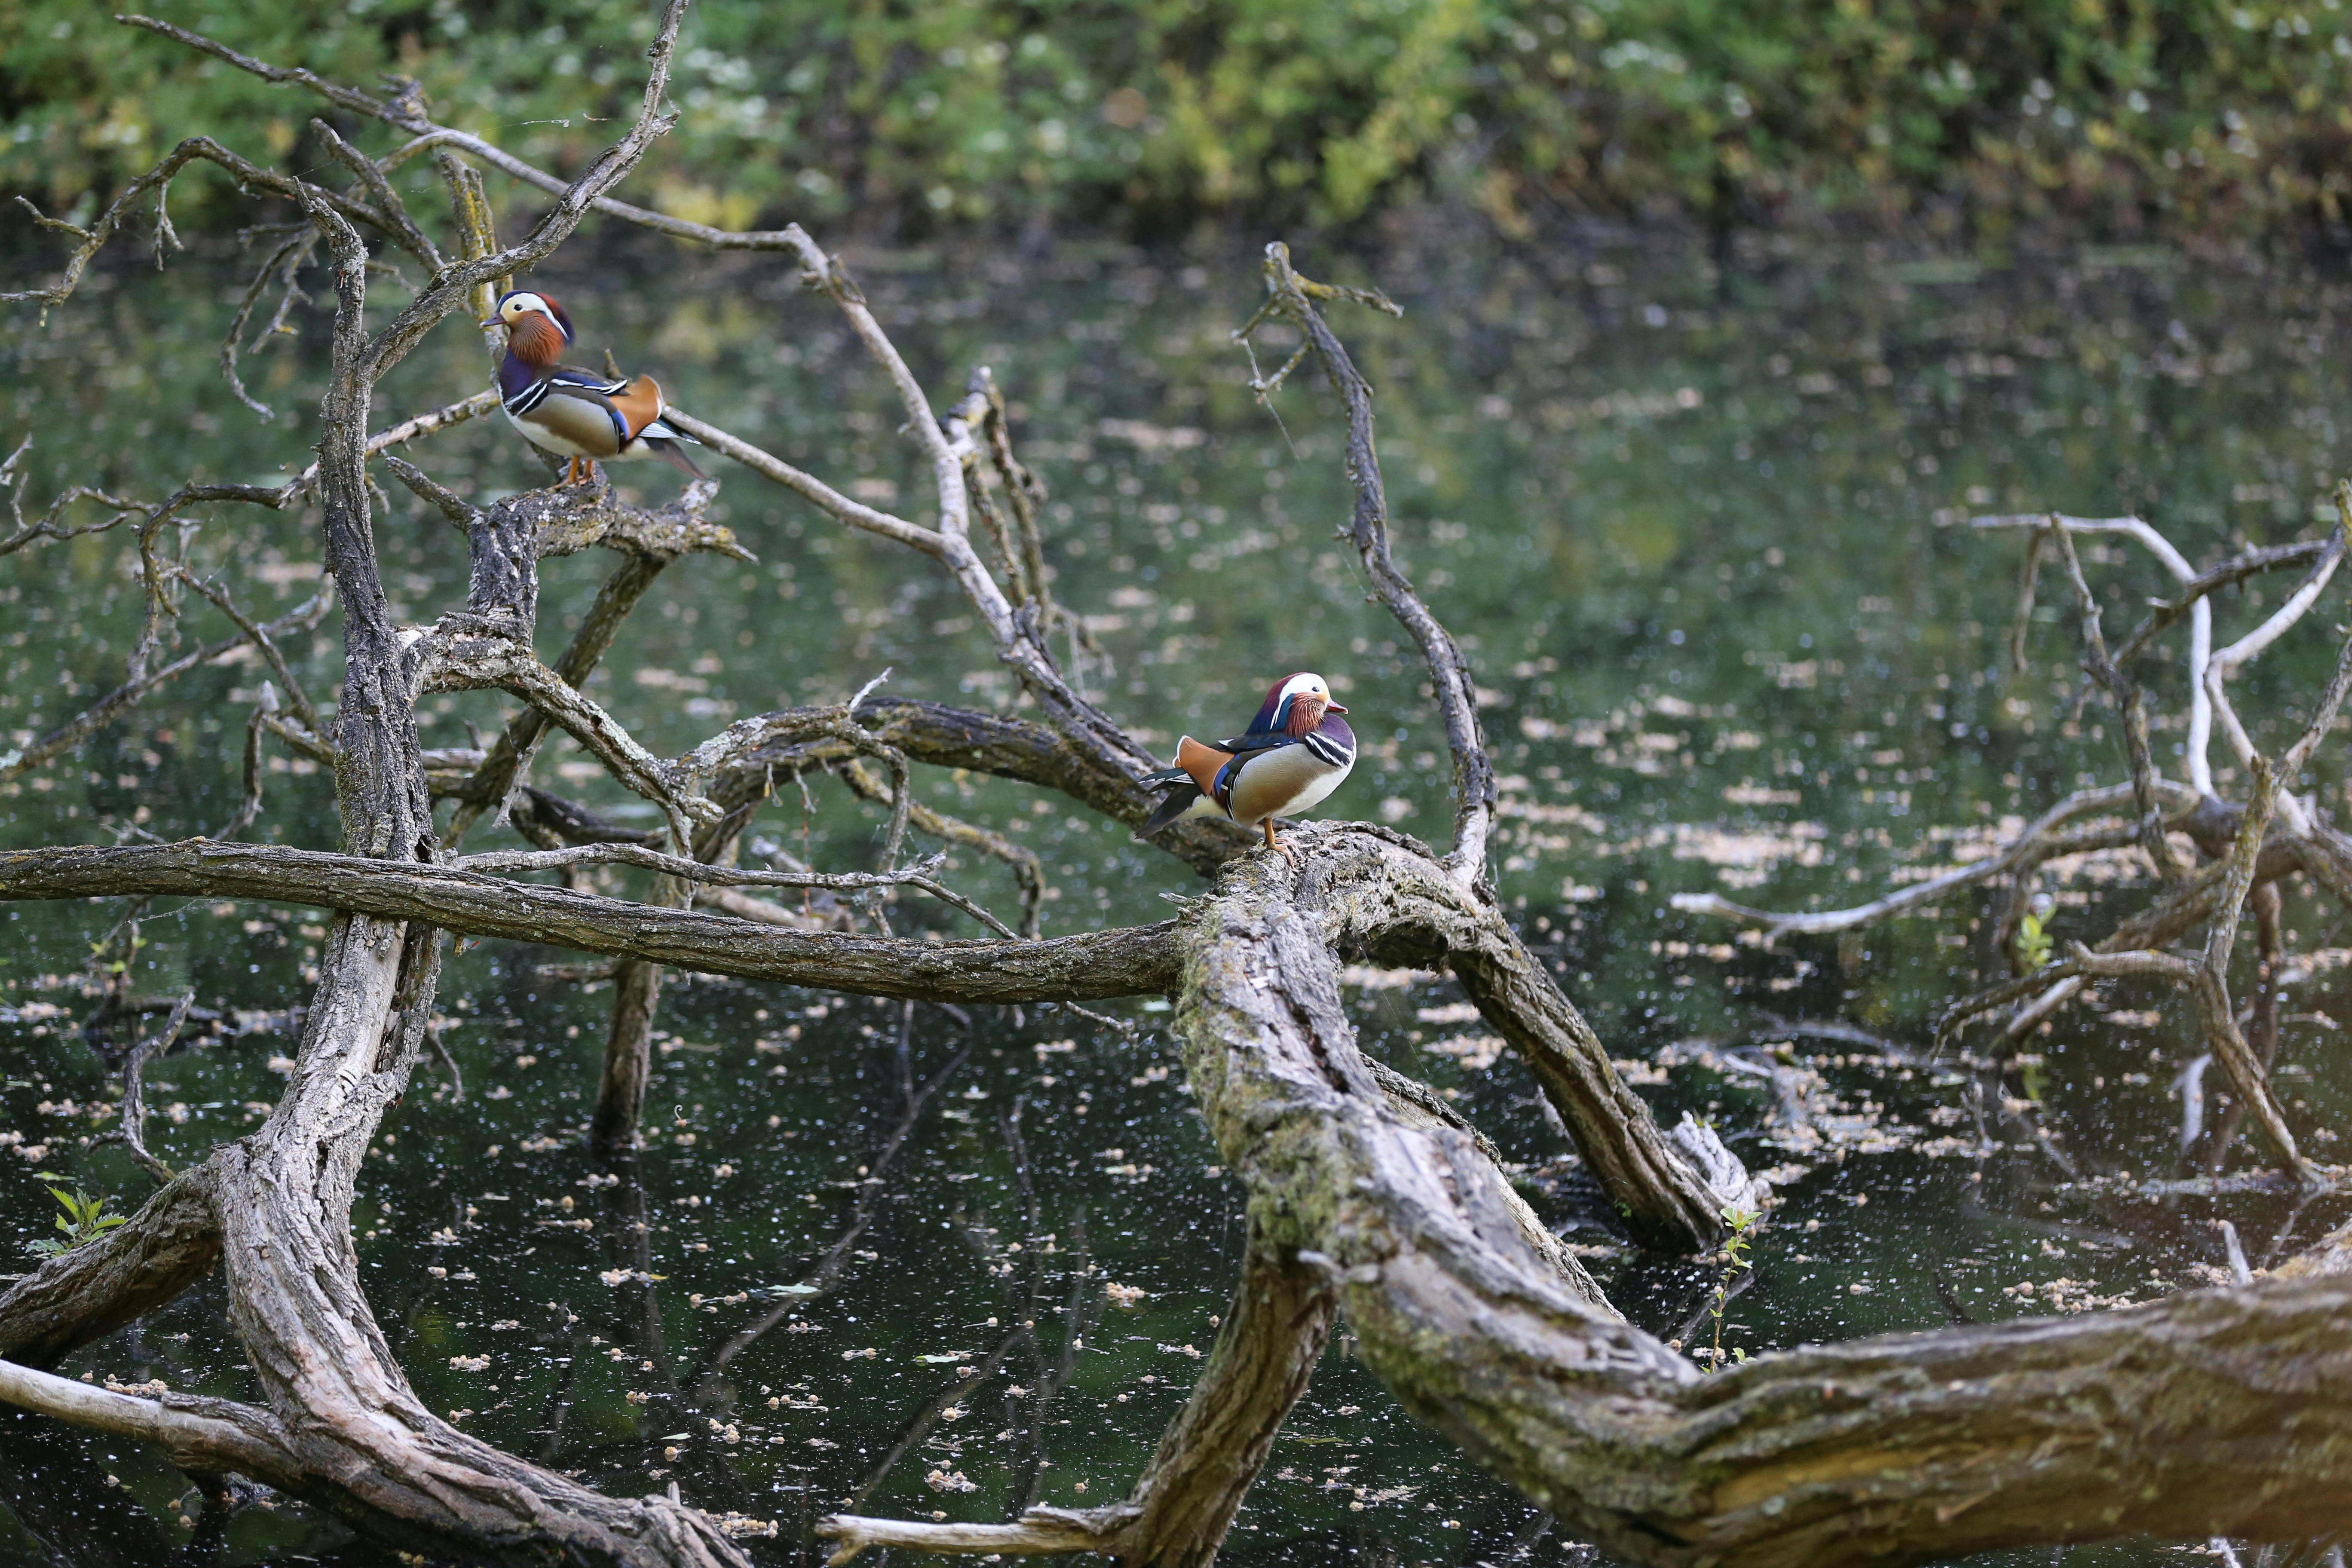 birds on tree branch during daytime